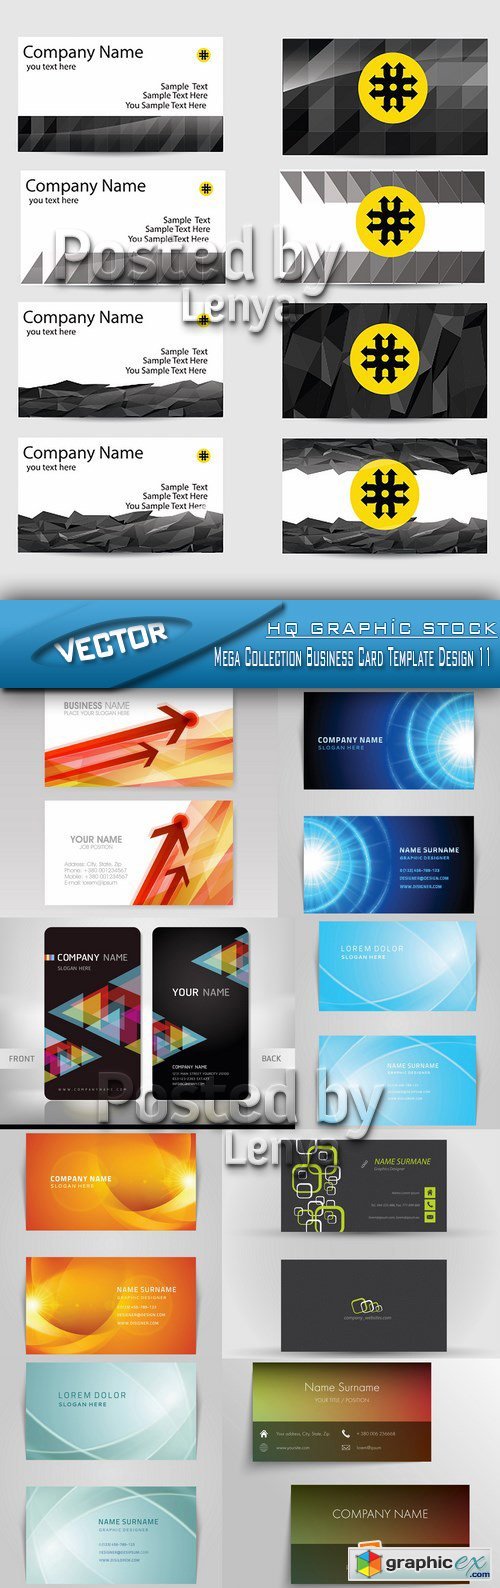 Stock Vector - Mega Collection Business Card Template Design 11